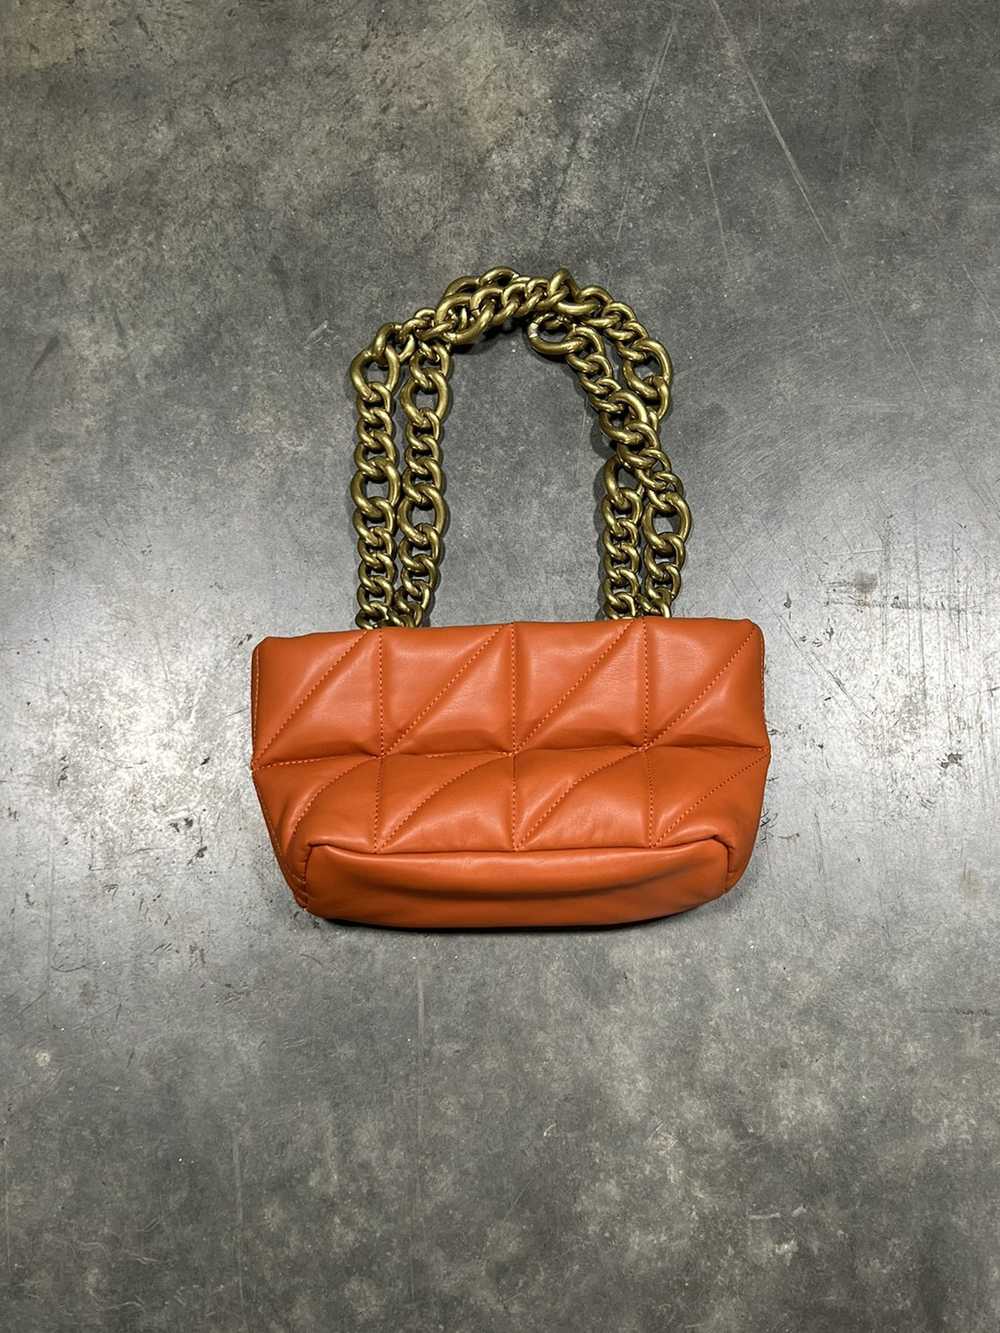 Zara ZARA Orange Fluff Hand Bag - image 2